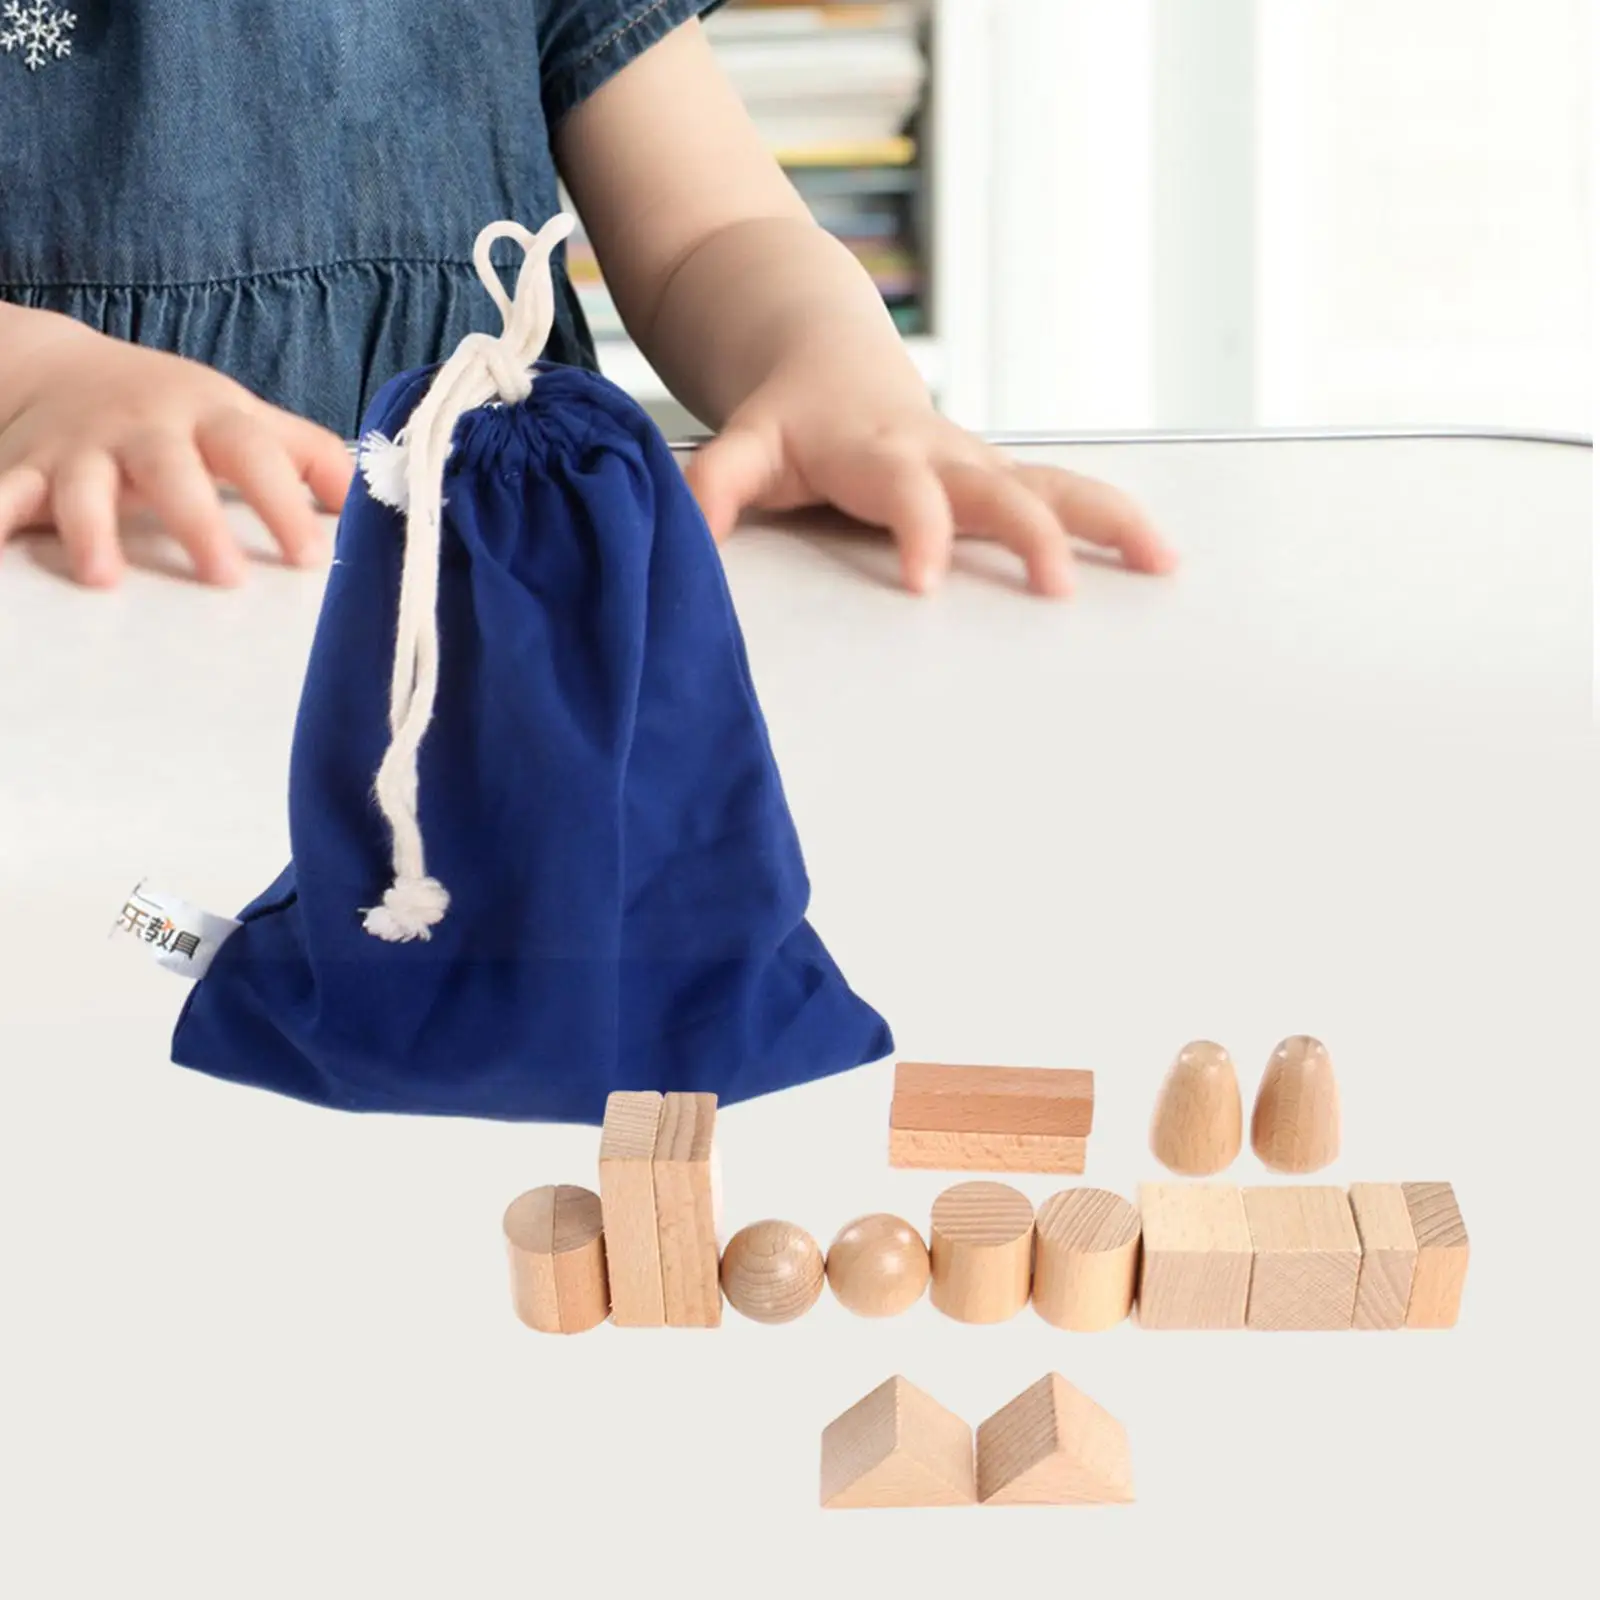 18x Wooden Geometry Blocks Building Blocks Set Educational Toys DIY for Kids